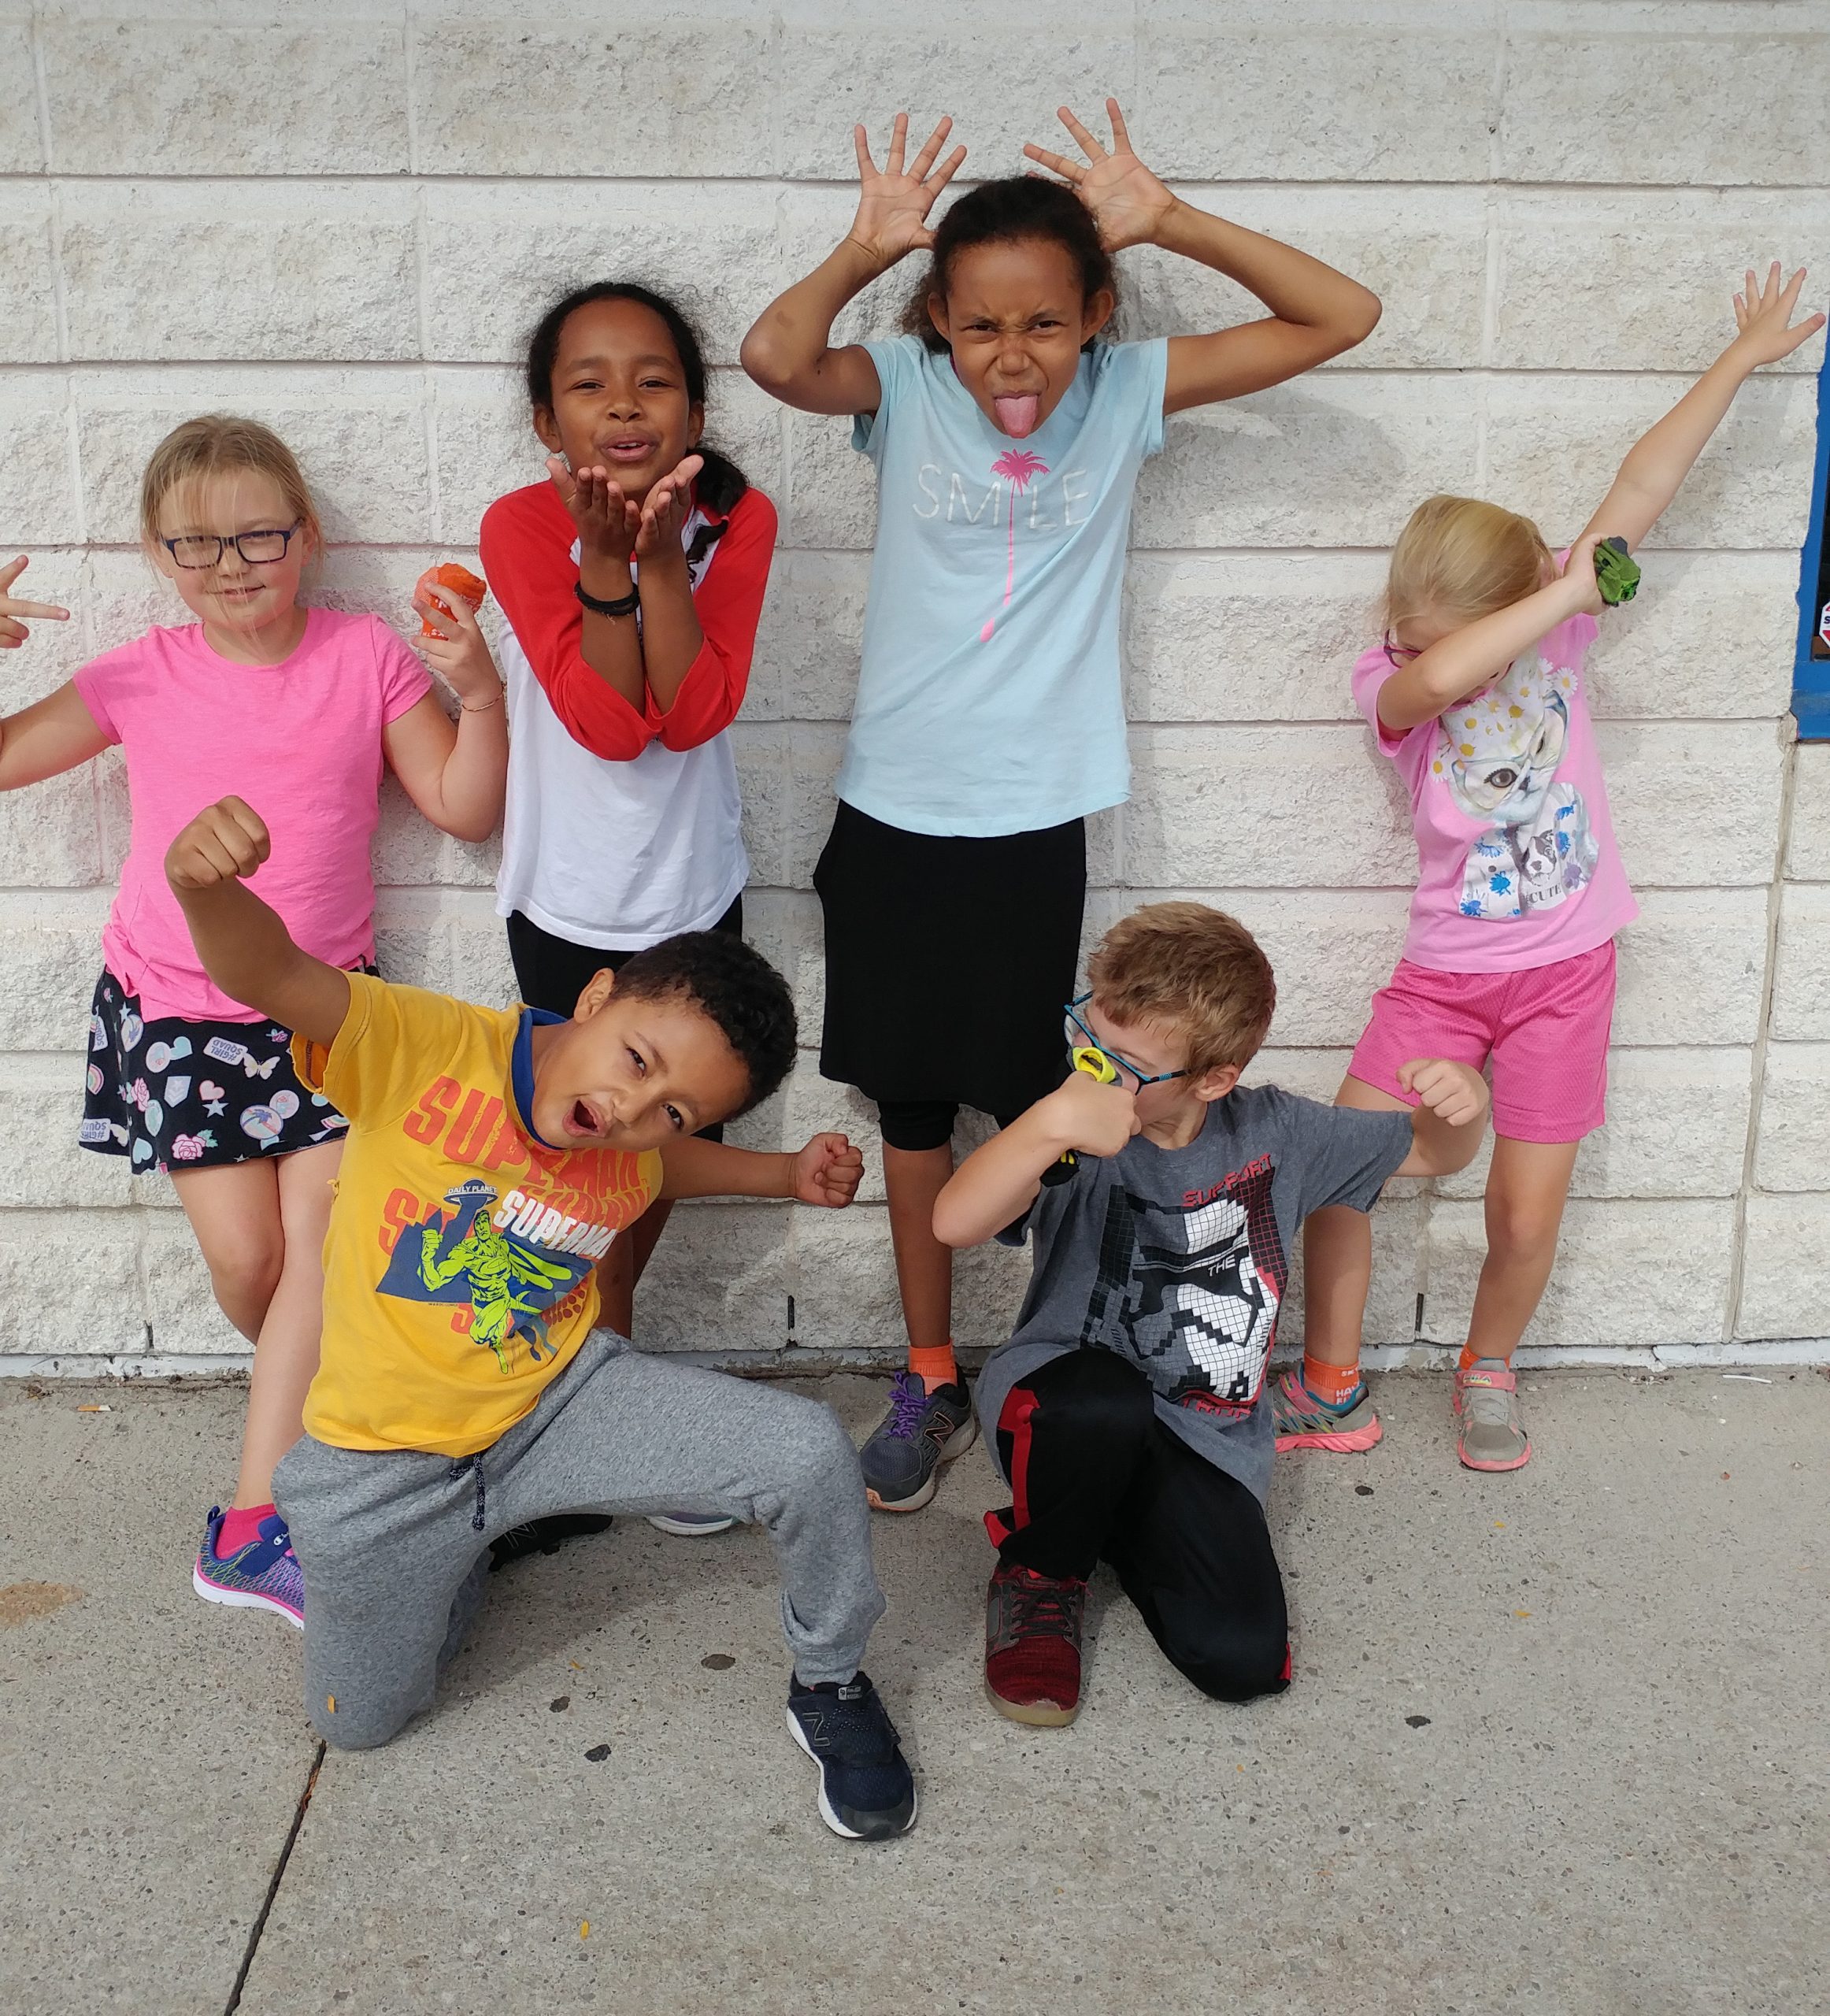 Six children show various expressive poses.